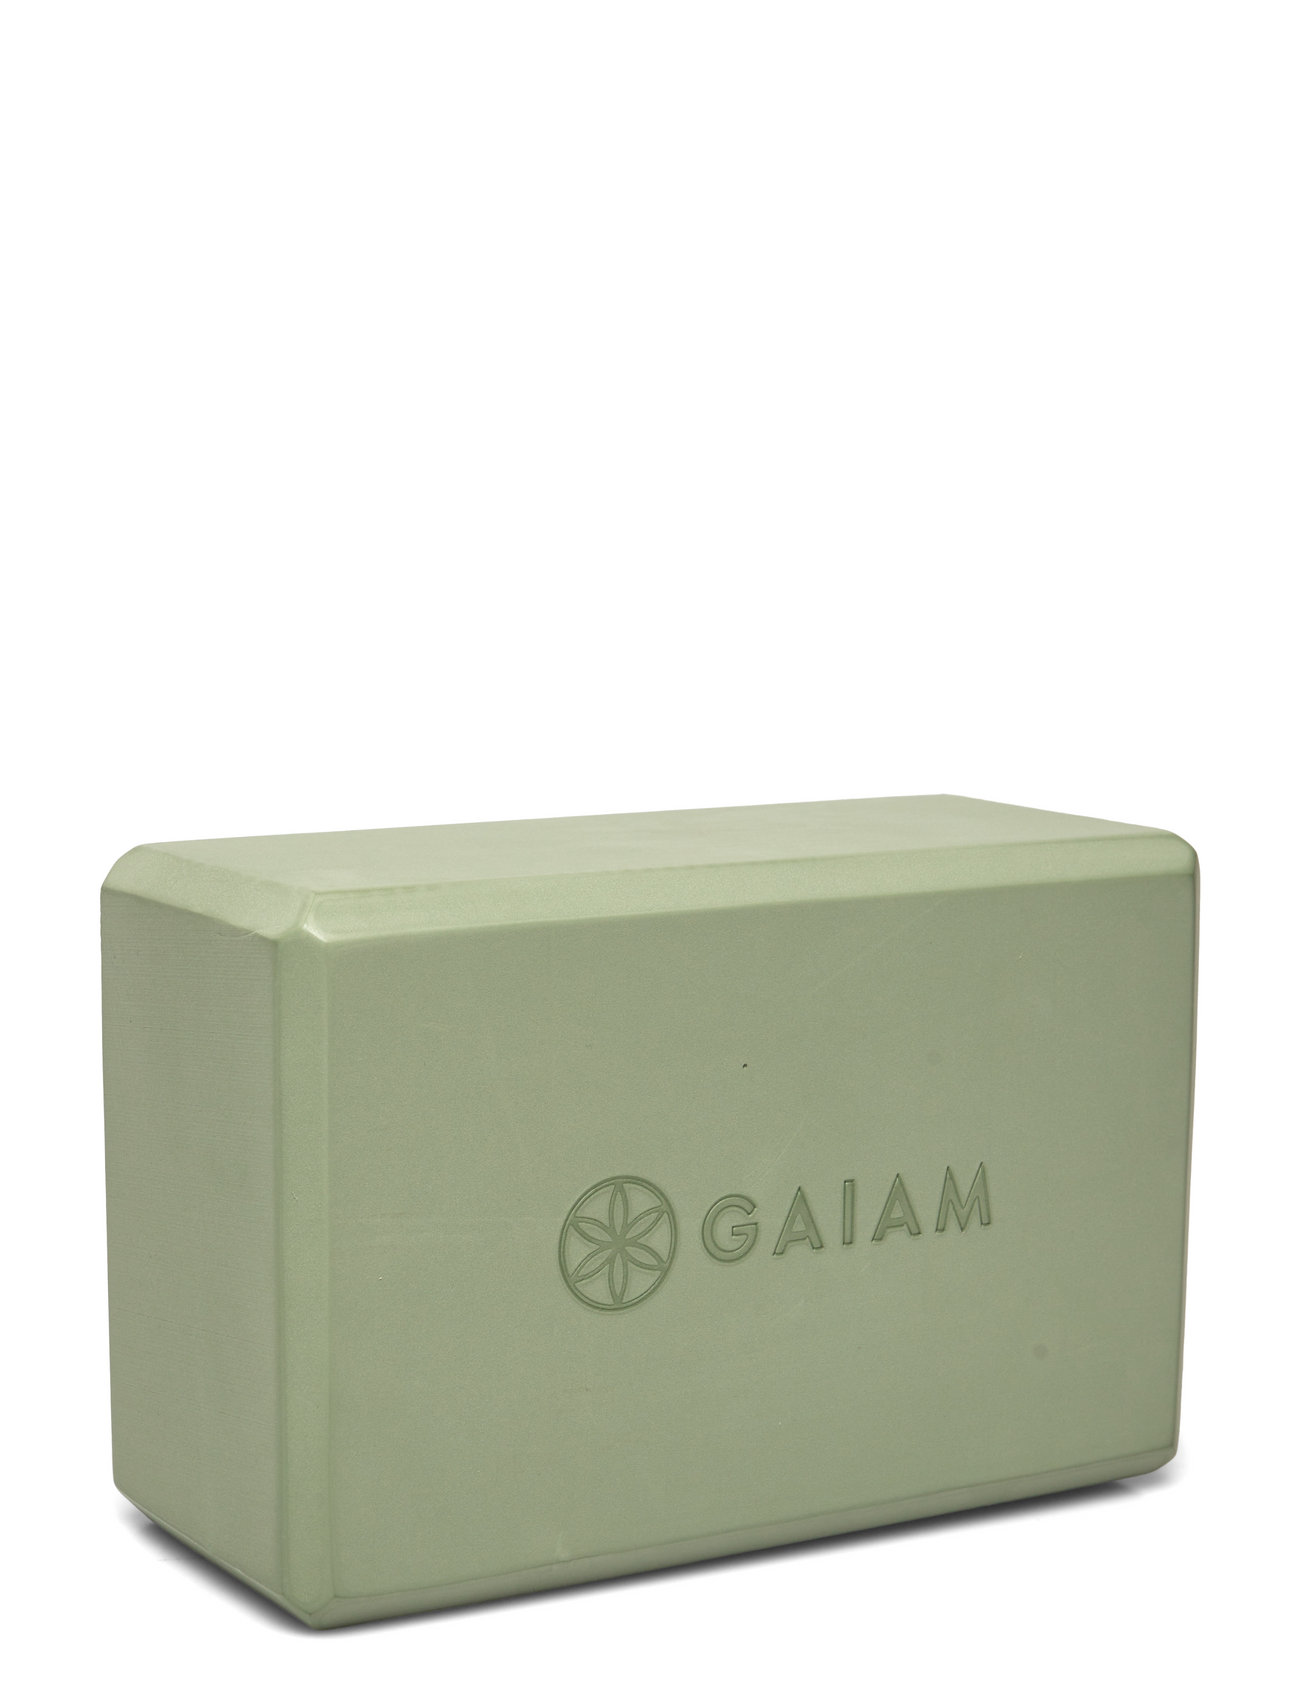 Gaiam Gaiam Vintage Green Block - Sports Equipment